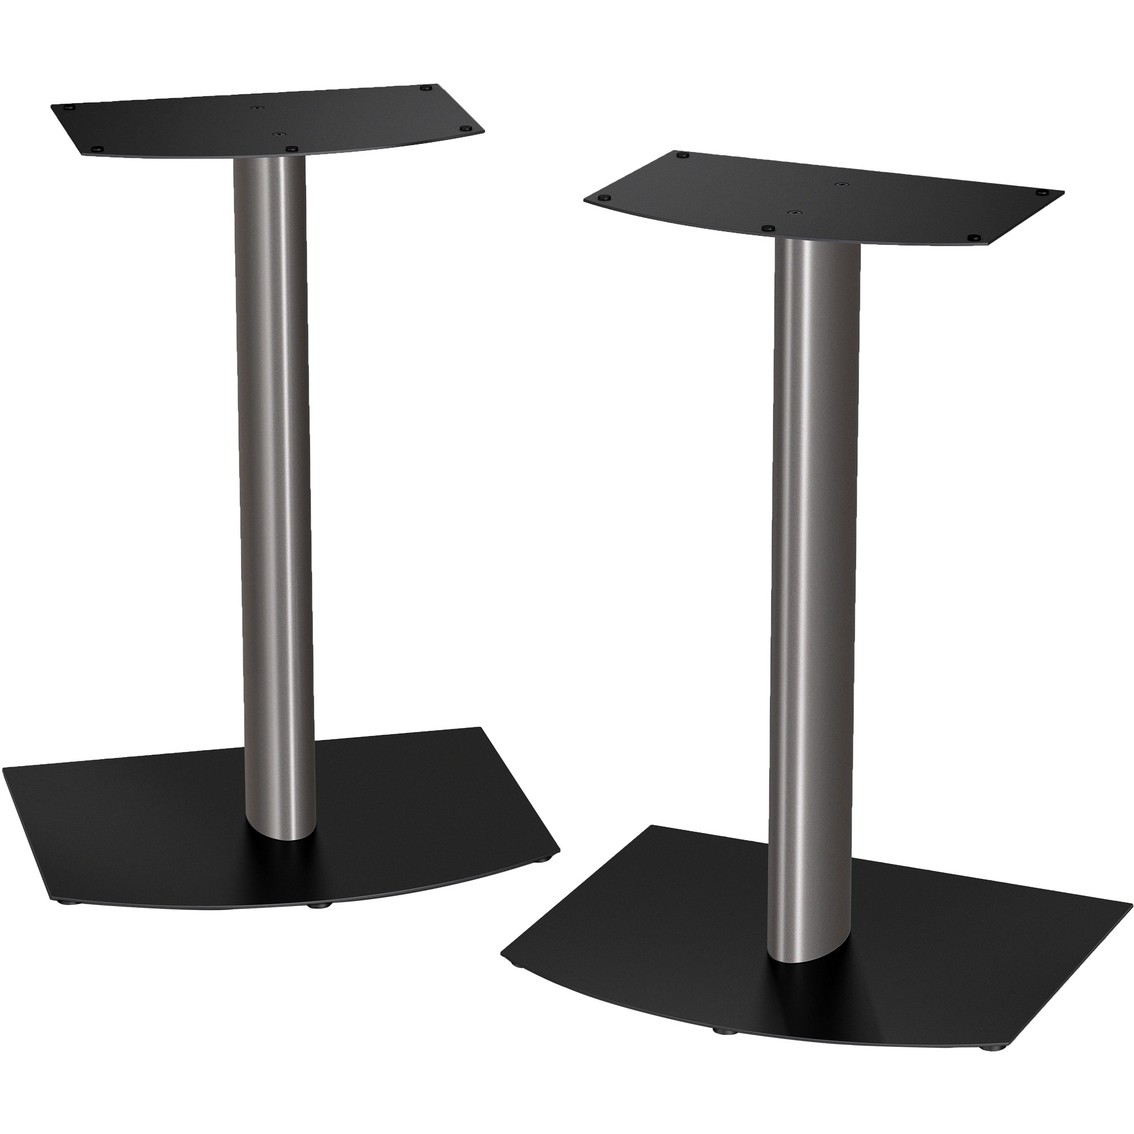 Bose FS-1 Bookshelf Speaker Floor Stands (pair) - Black and Silver